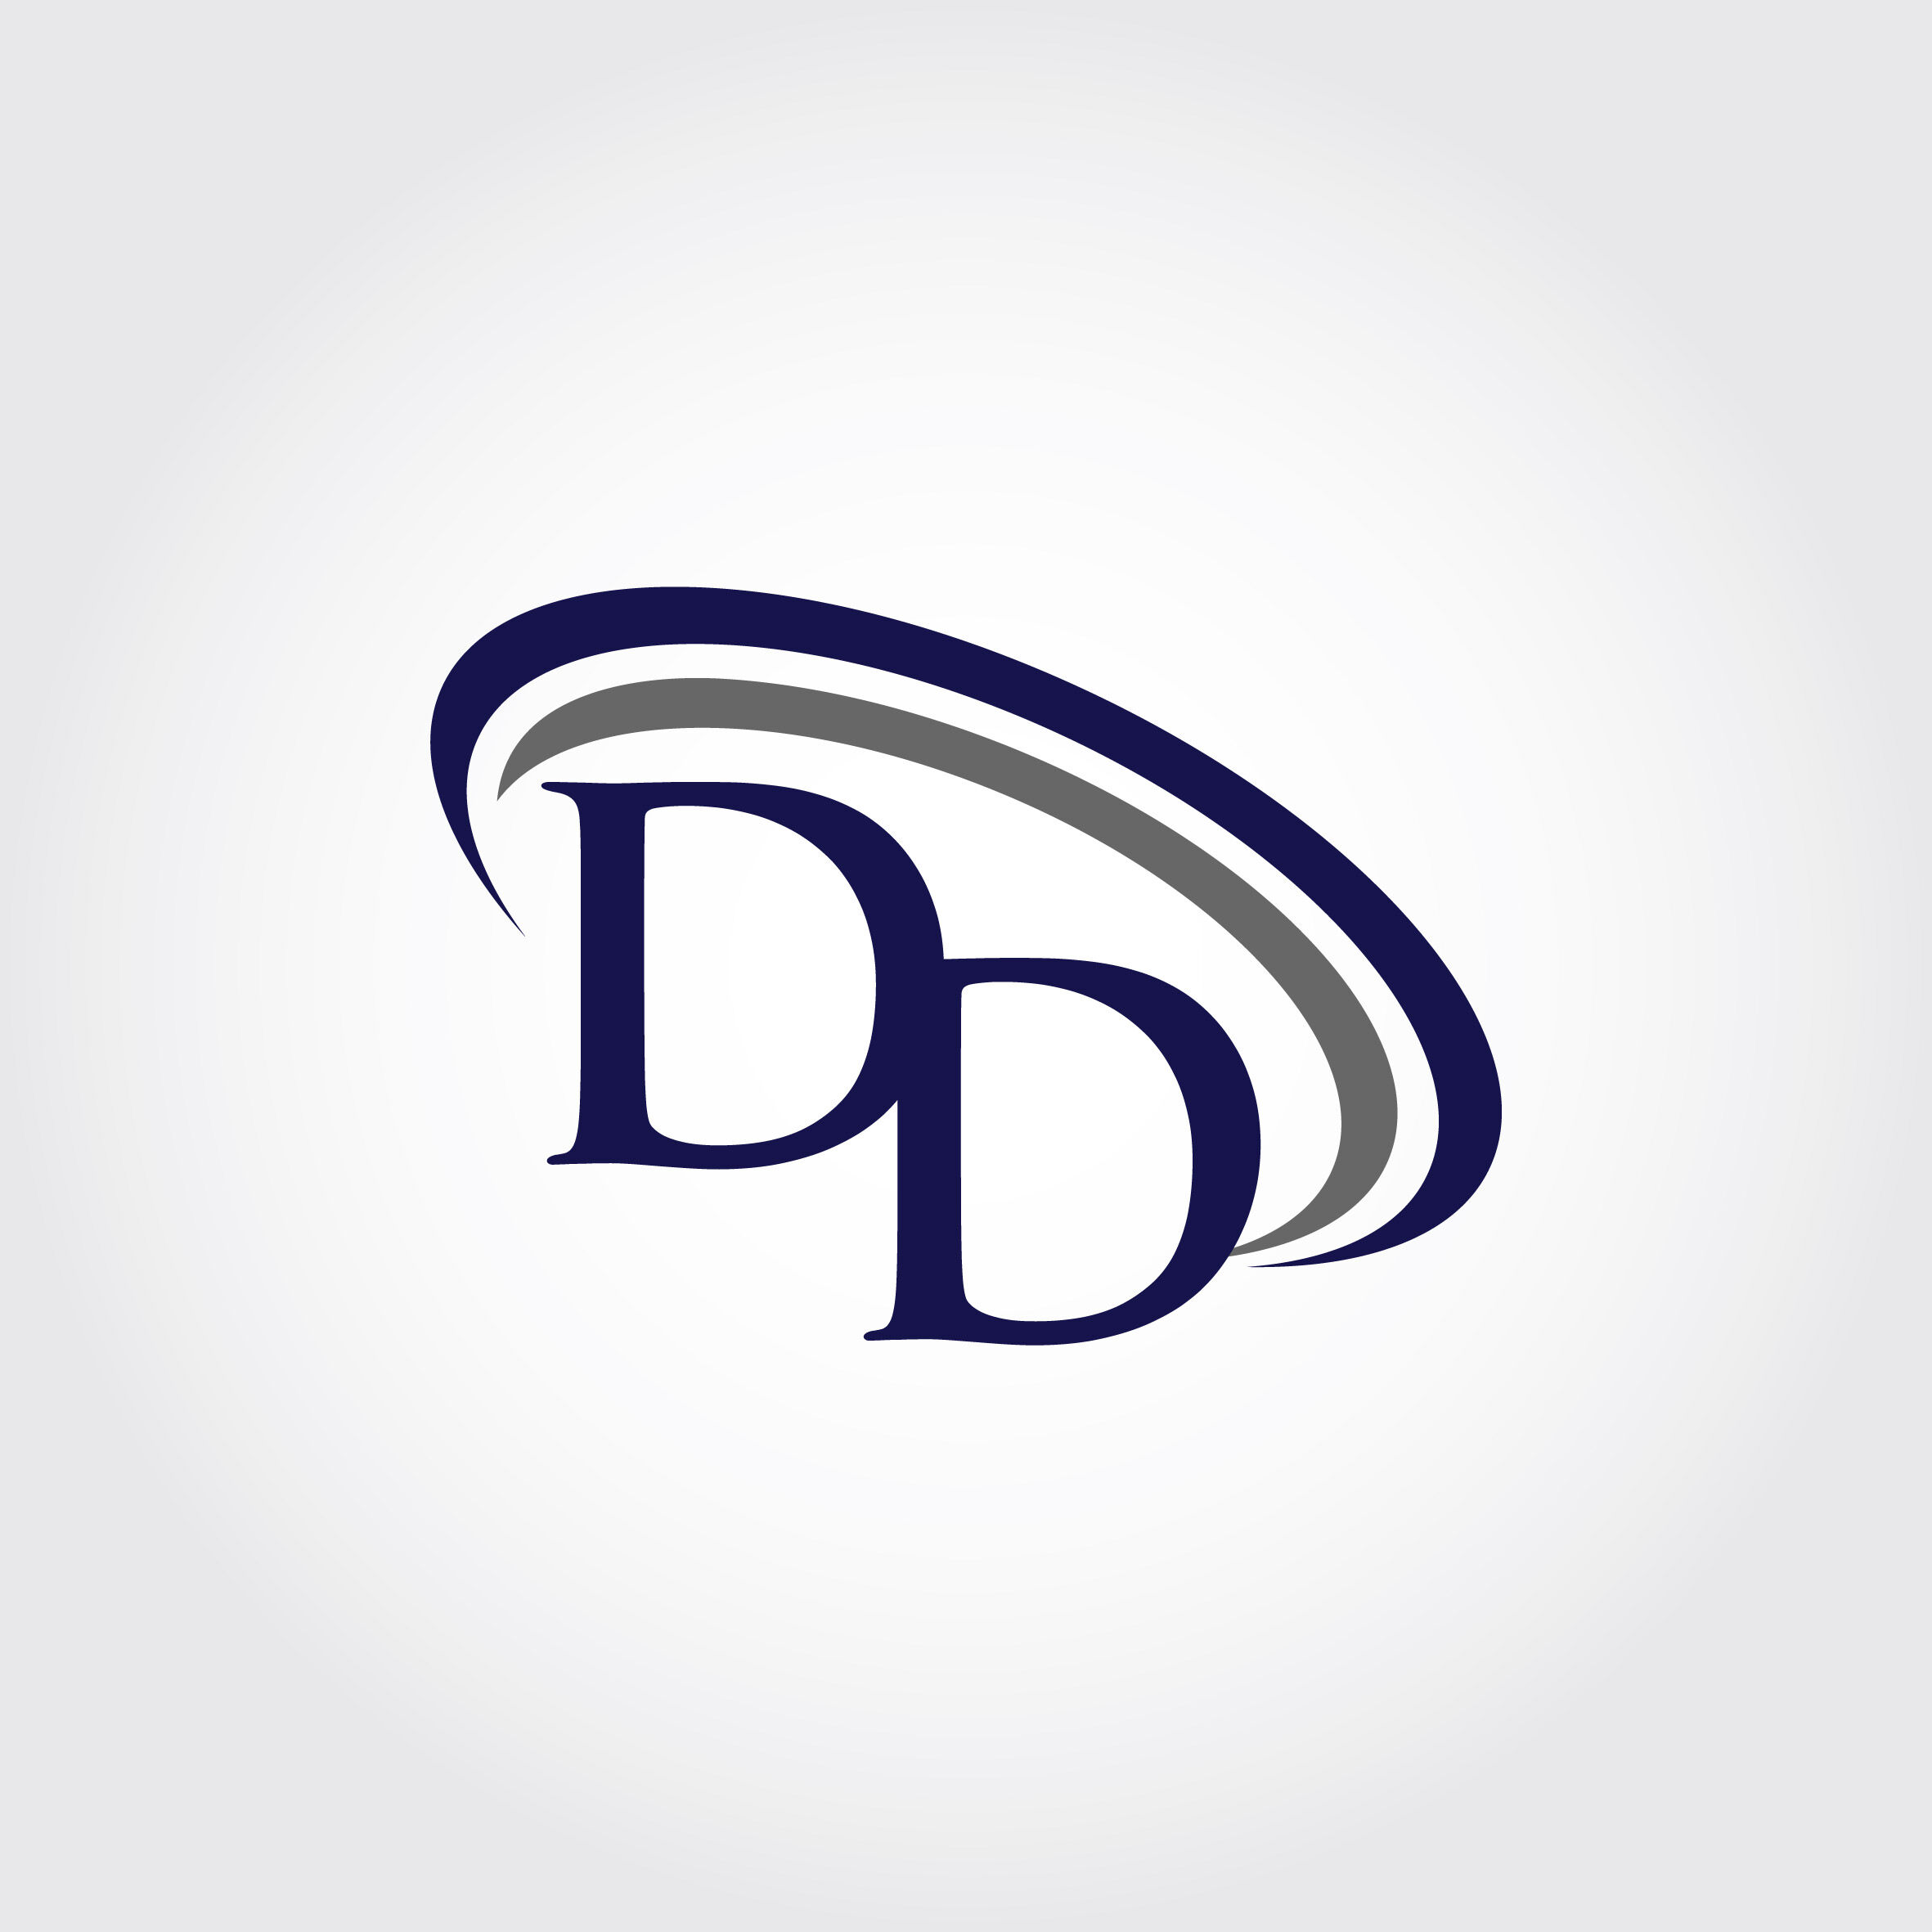 monogram-dd-logo-design-by-vectorseller-thehungryjpeg